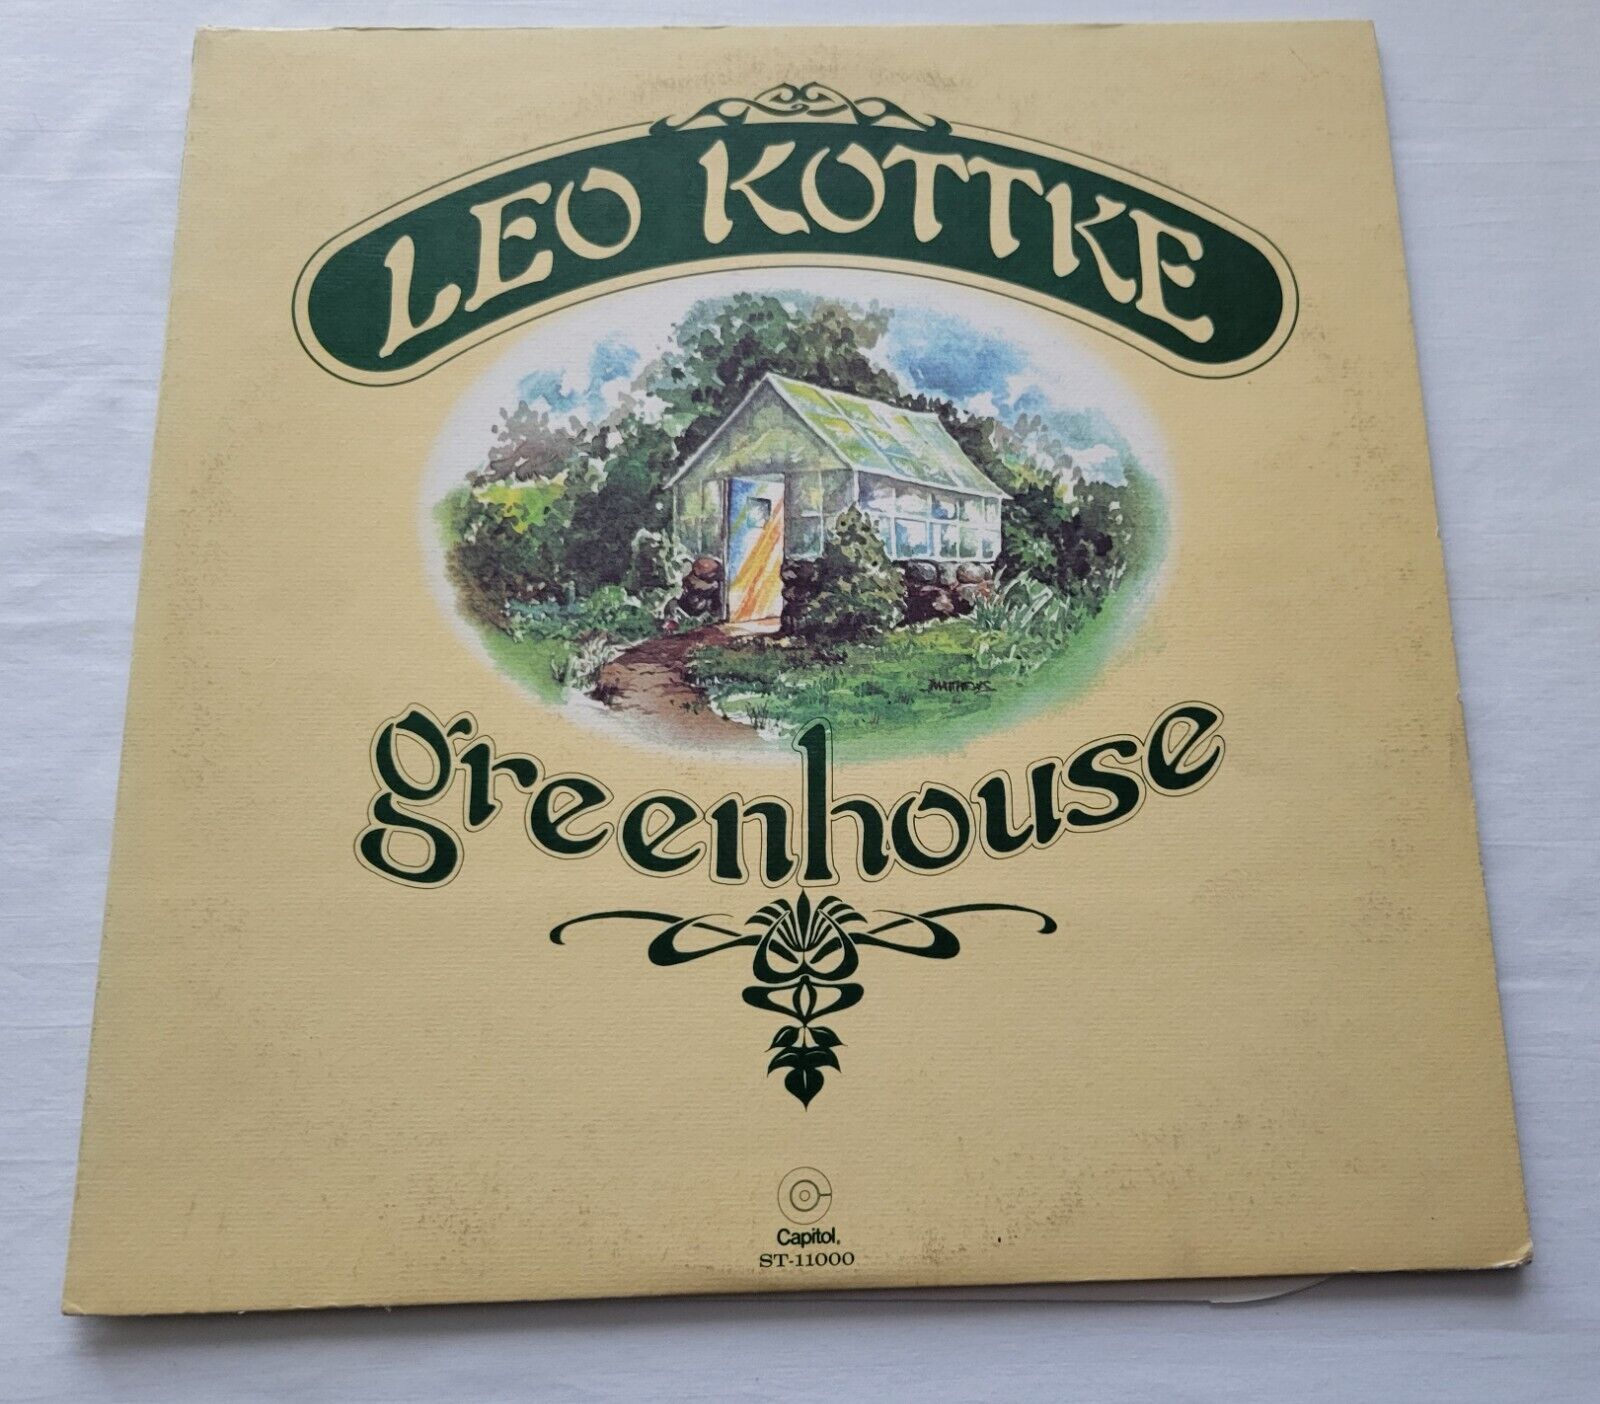 Leo Kottke - Greenhouse LP Vinyl 1973 US ST-11000